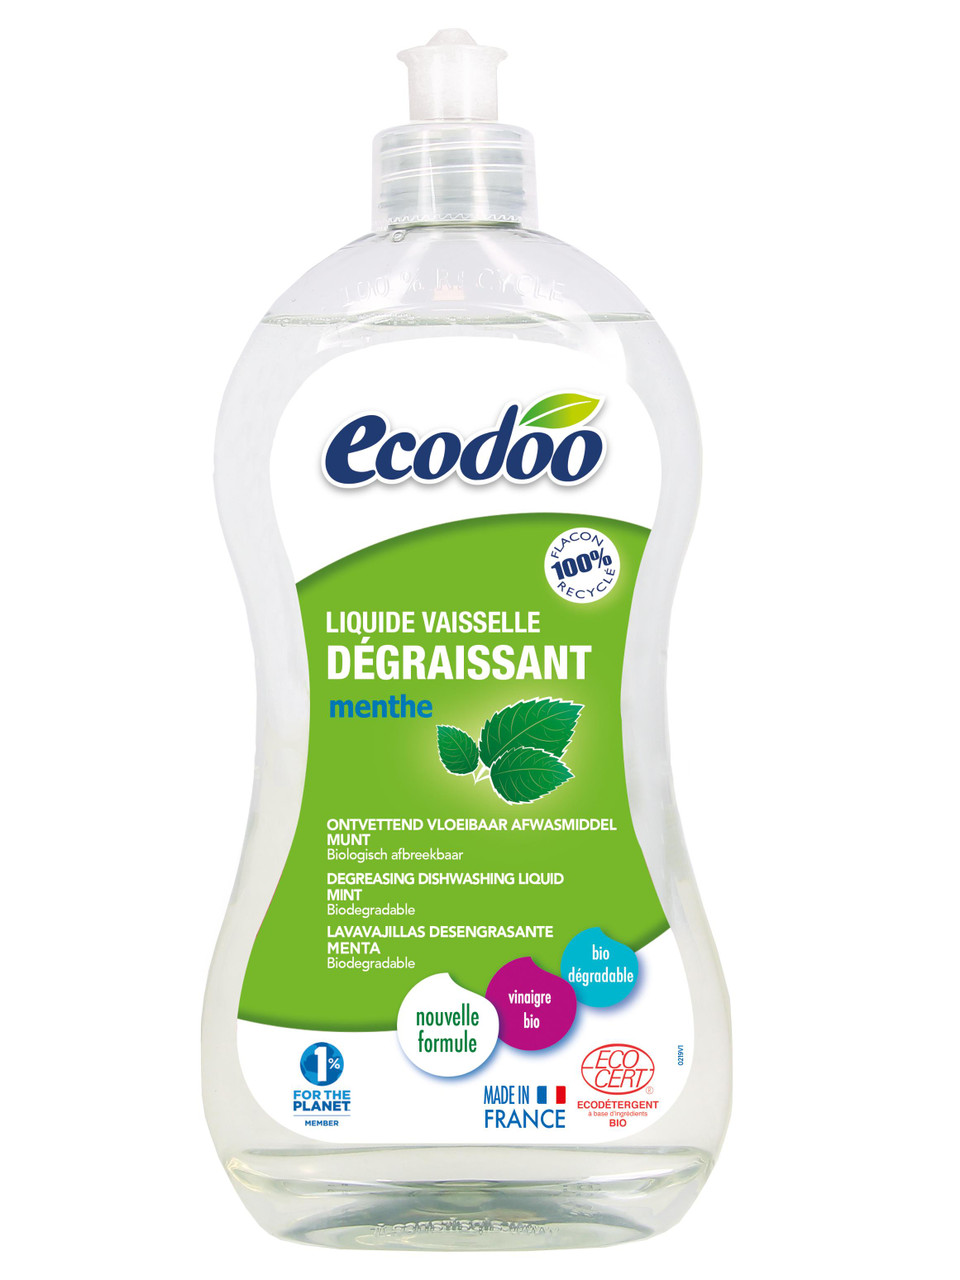 Ecological and biodegradable dishwashing liquid